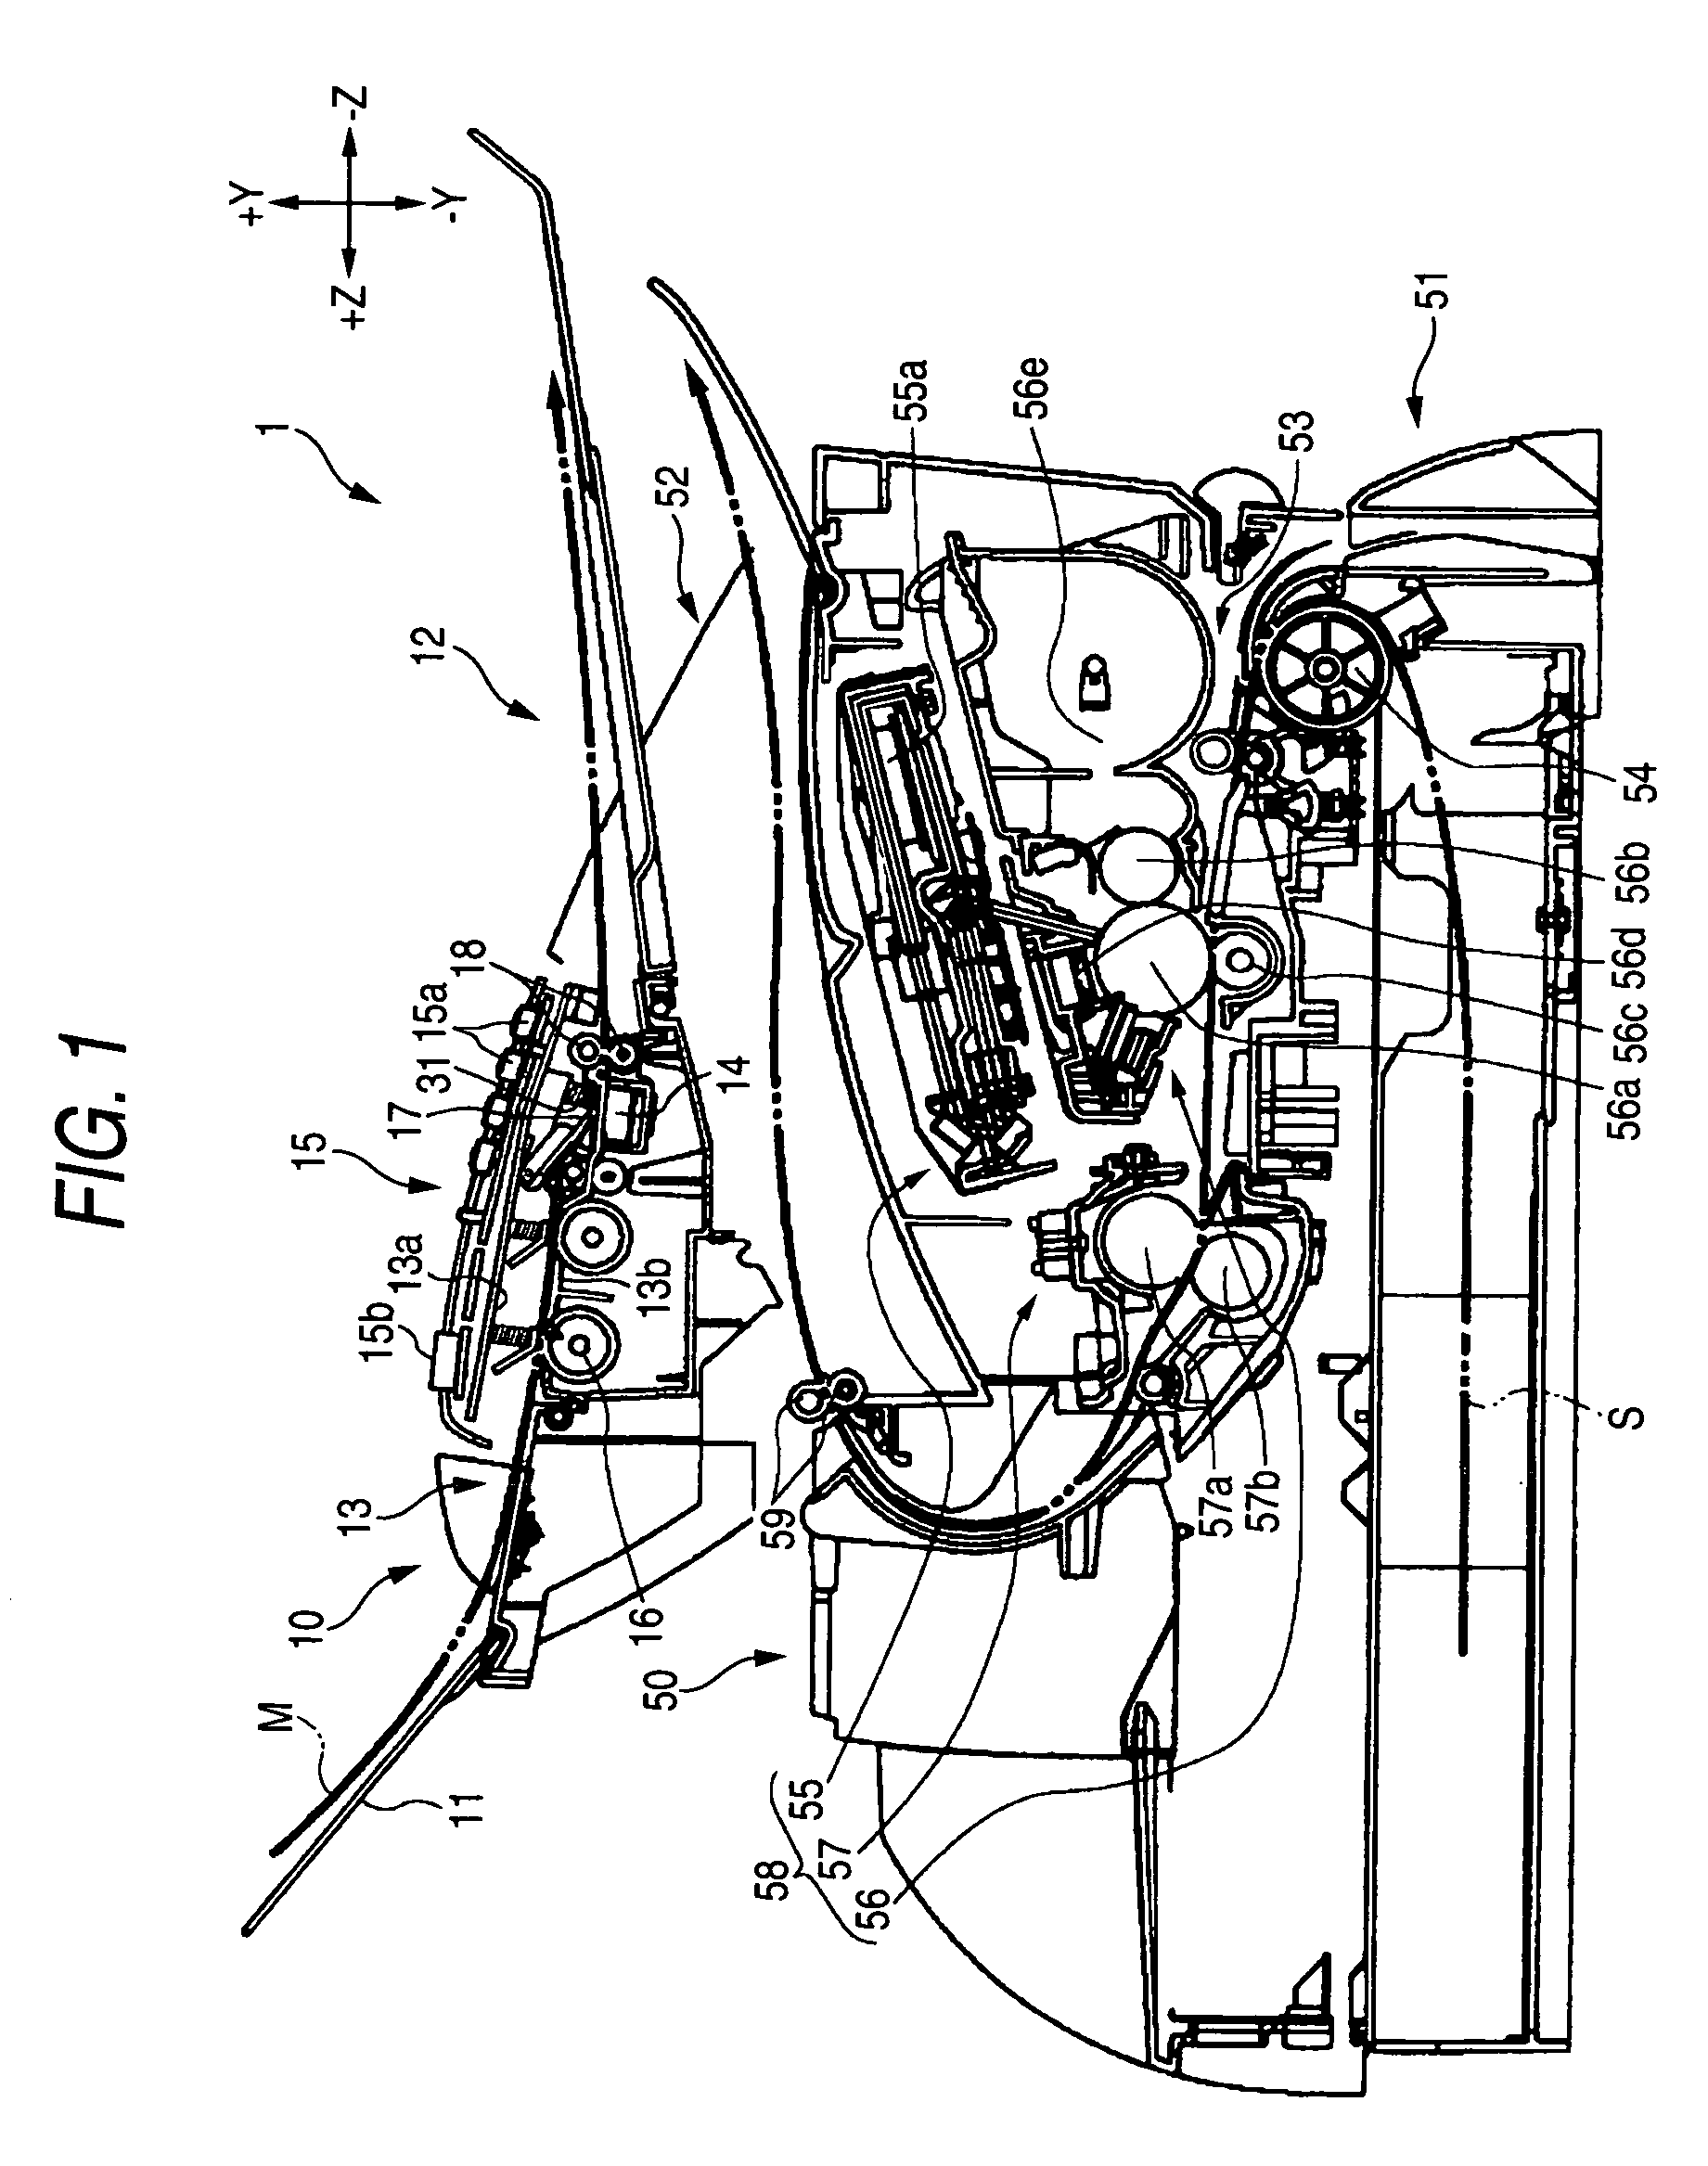 Image reading apparatus and multi-functional apparatus